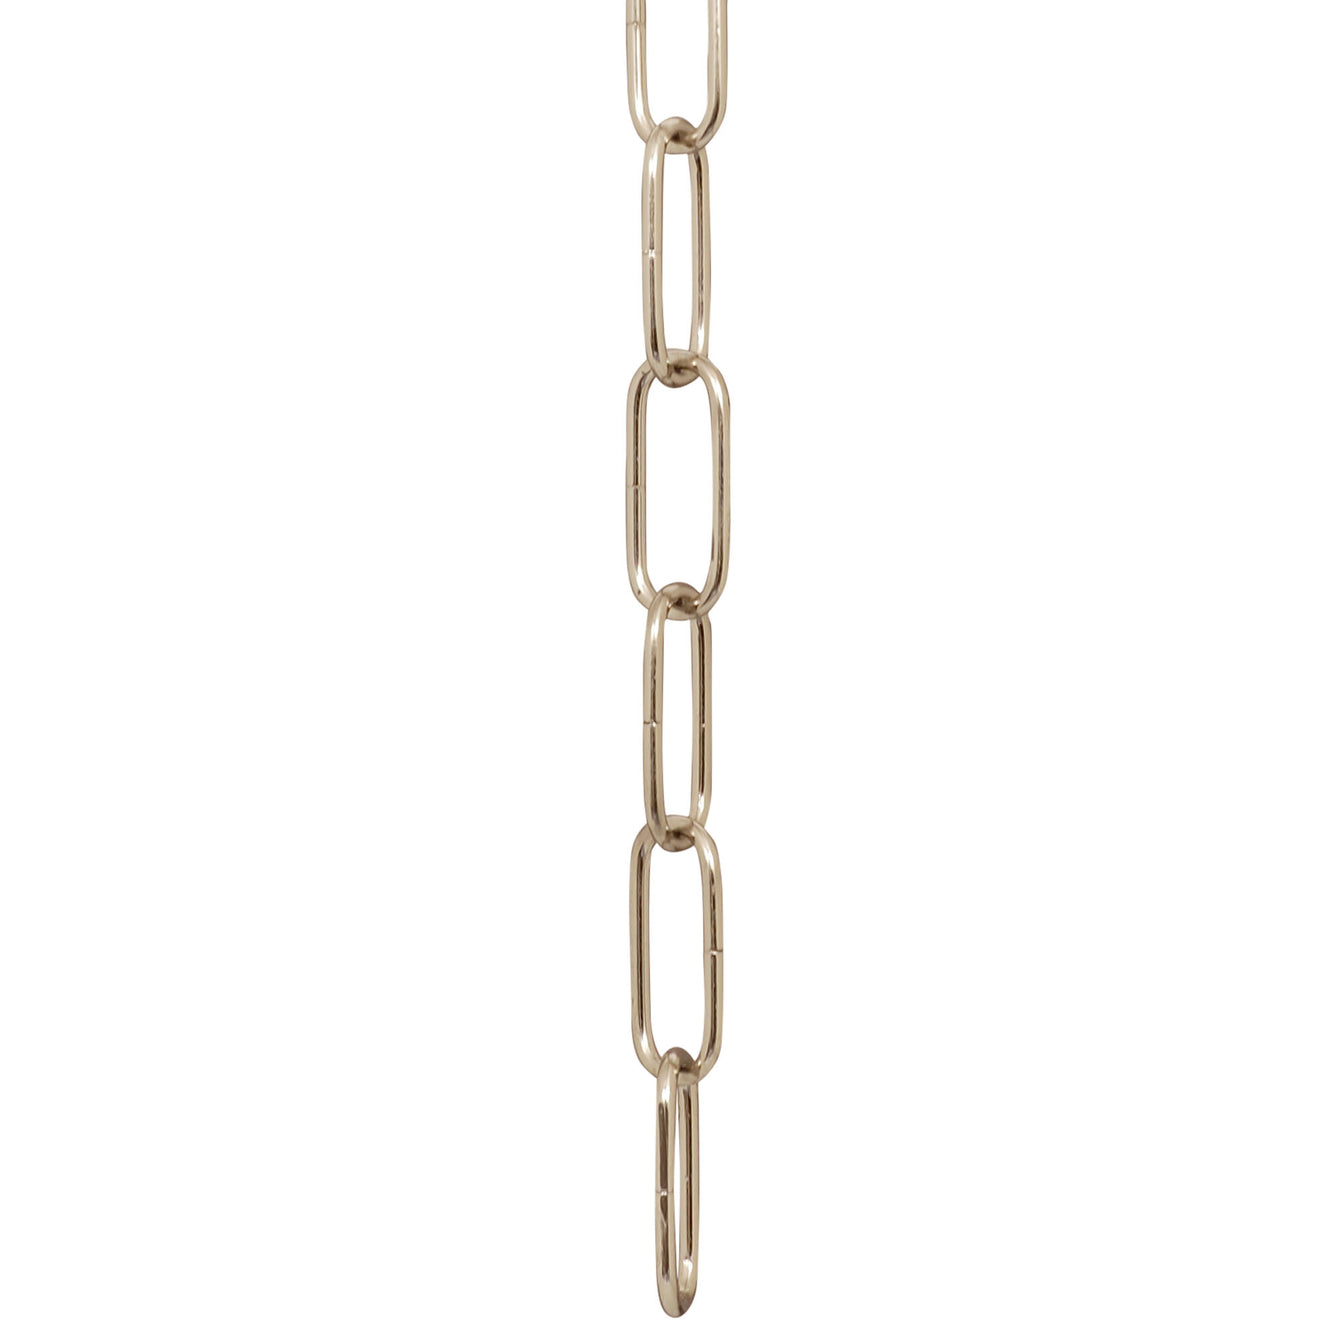 ElekTek Open Link Chain For Chandelier and Lighting Medium 38mm x 15mm Per Linear Metre - Buy It Better Antique Copper